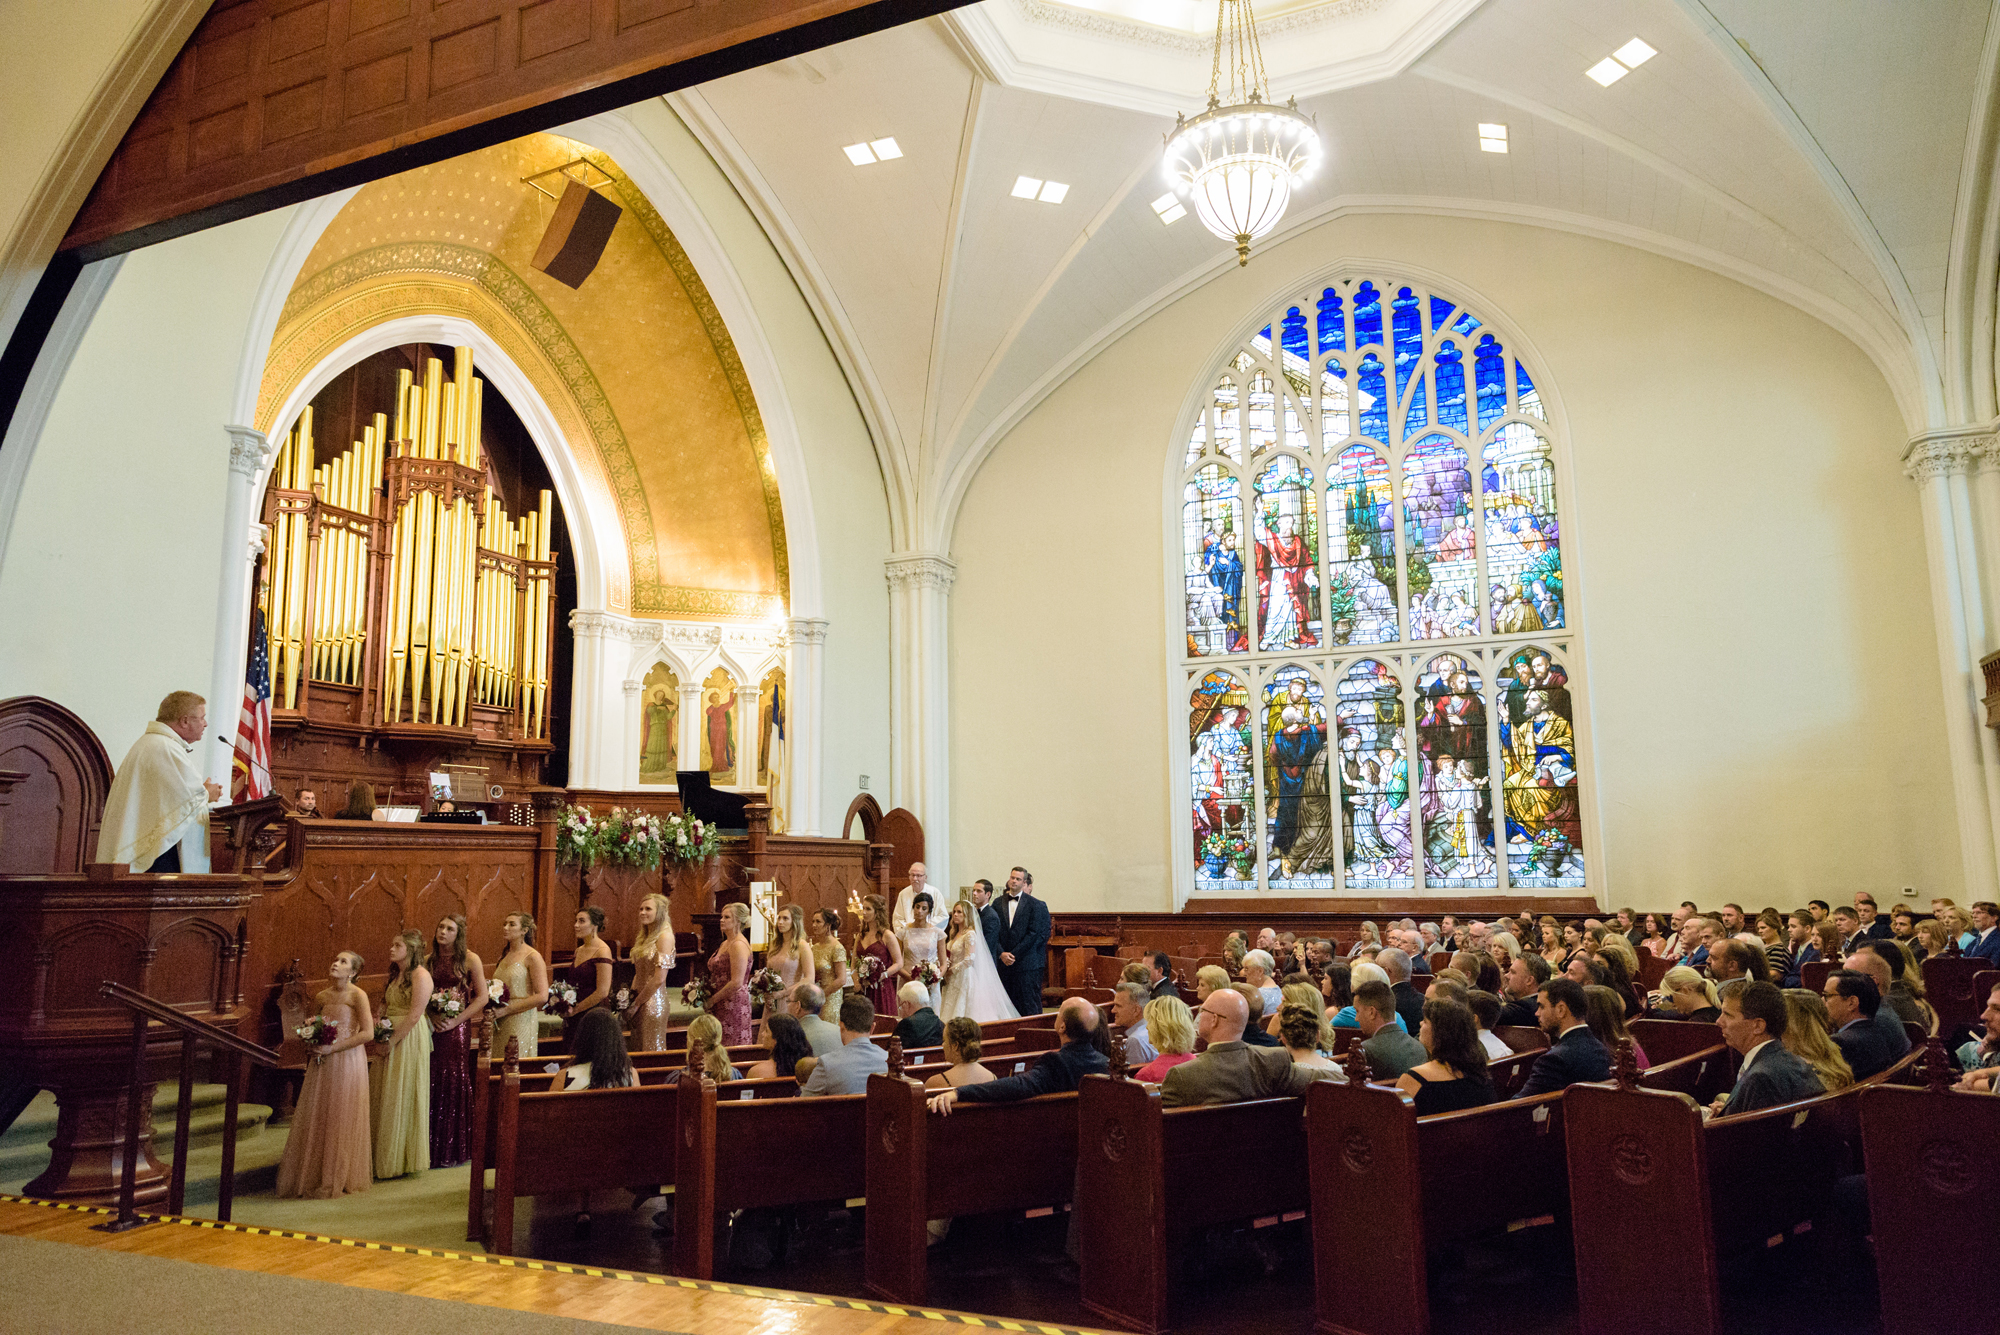 Wedding ceremony at St. Paul’s Memorial United Methodist Church